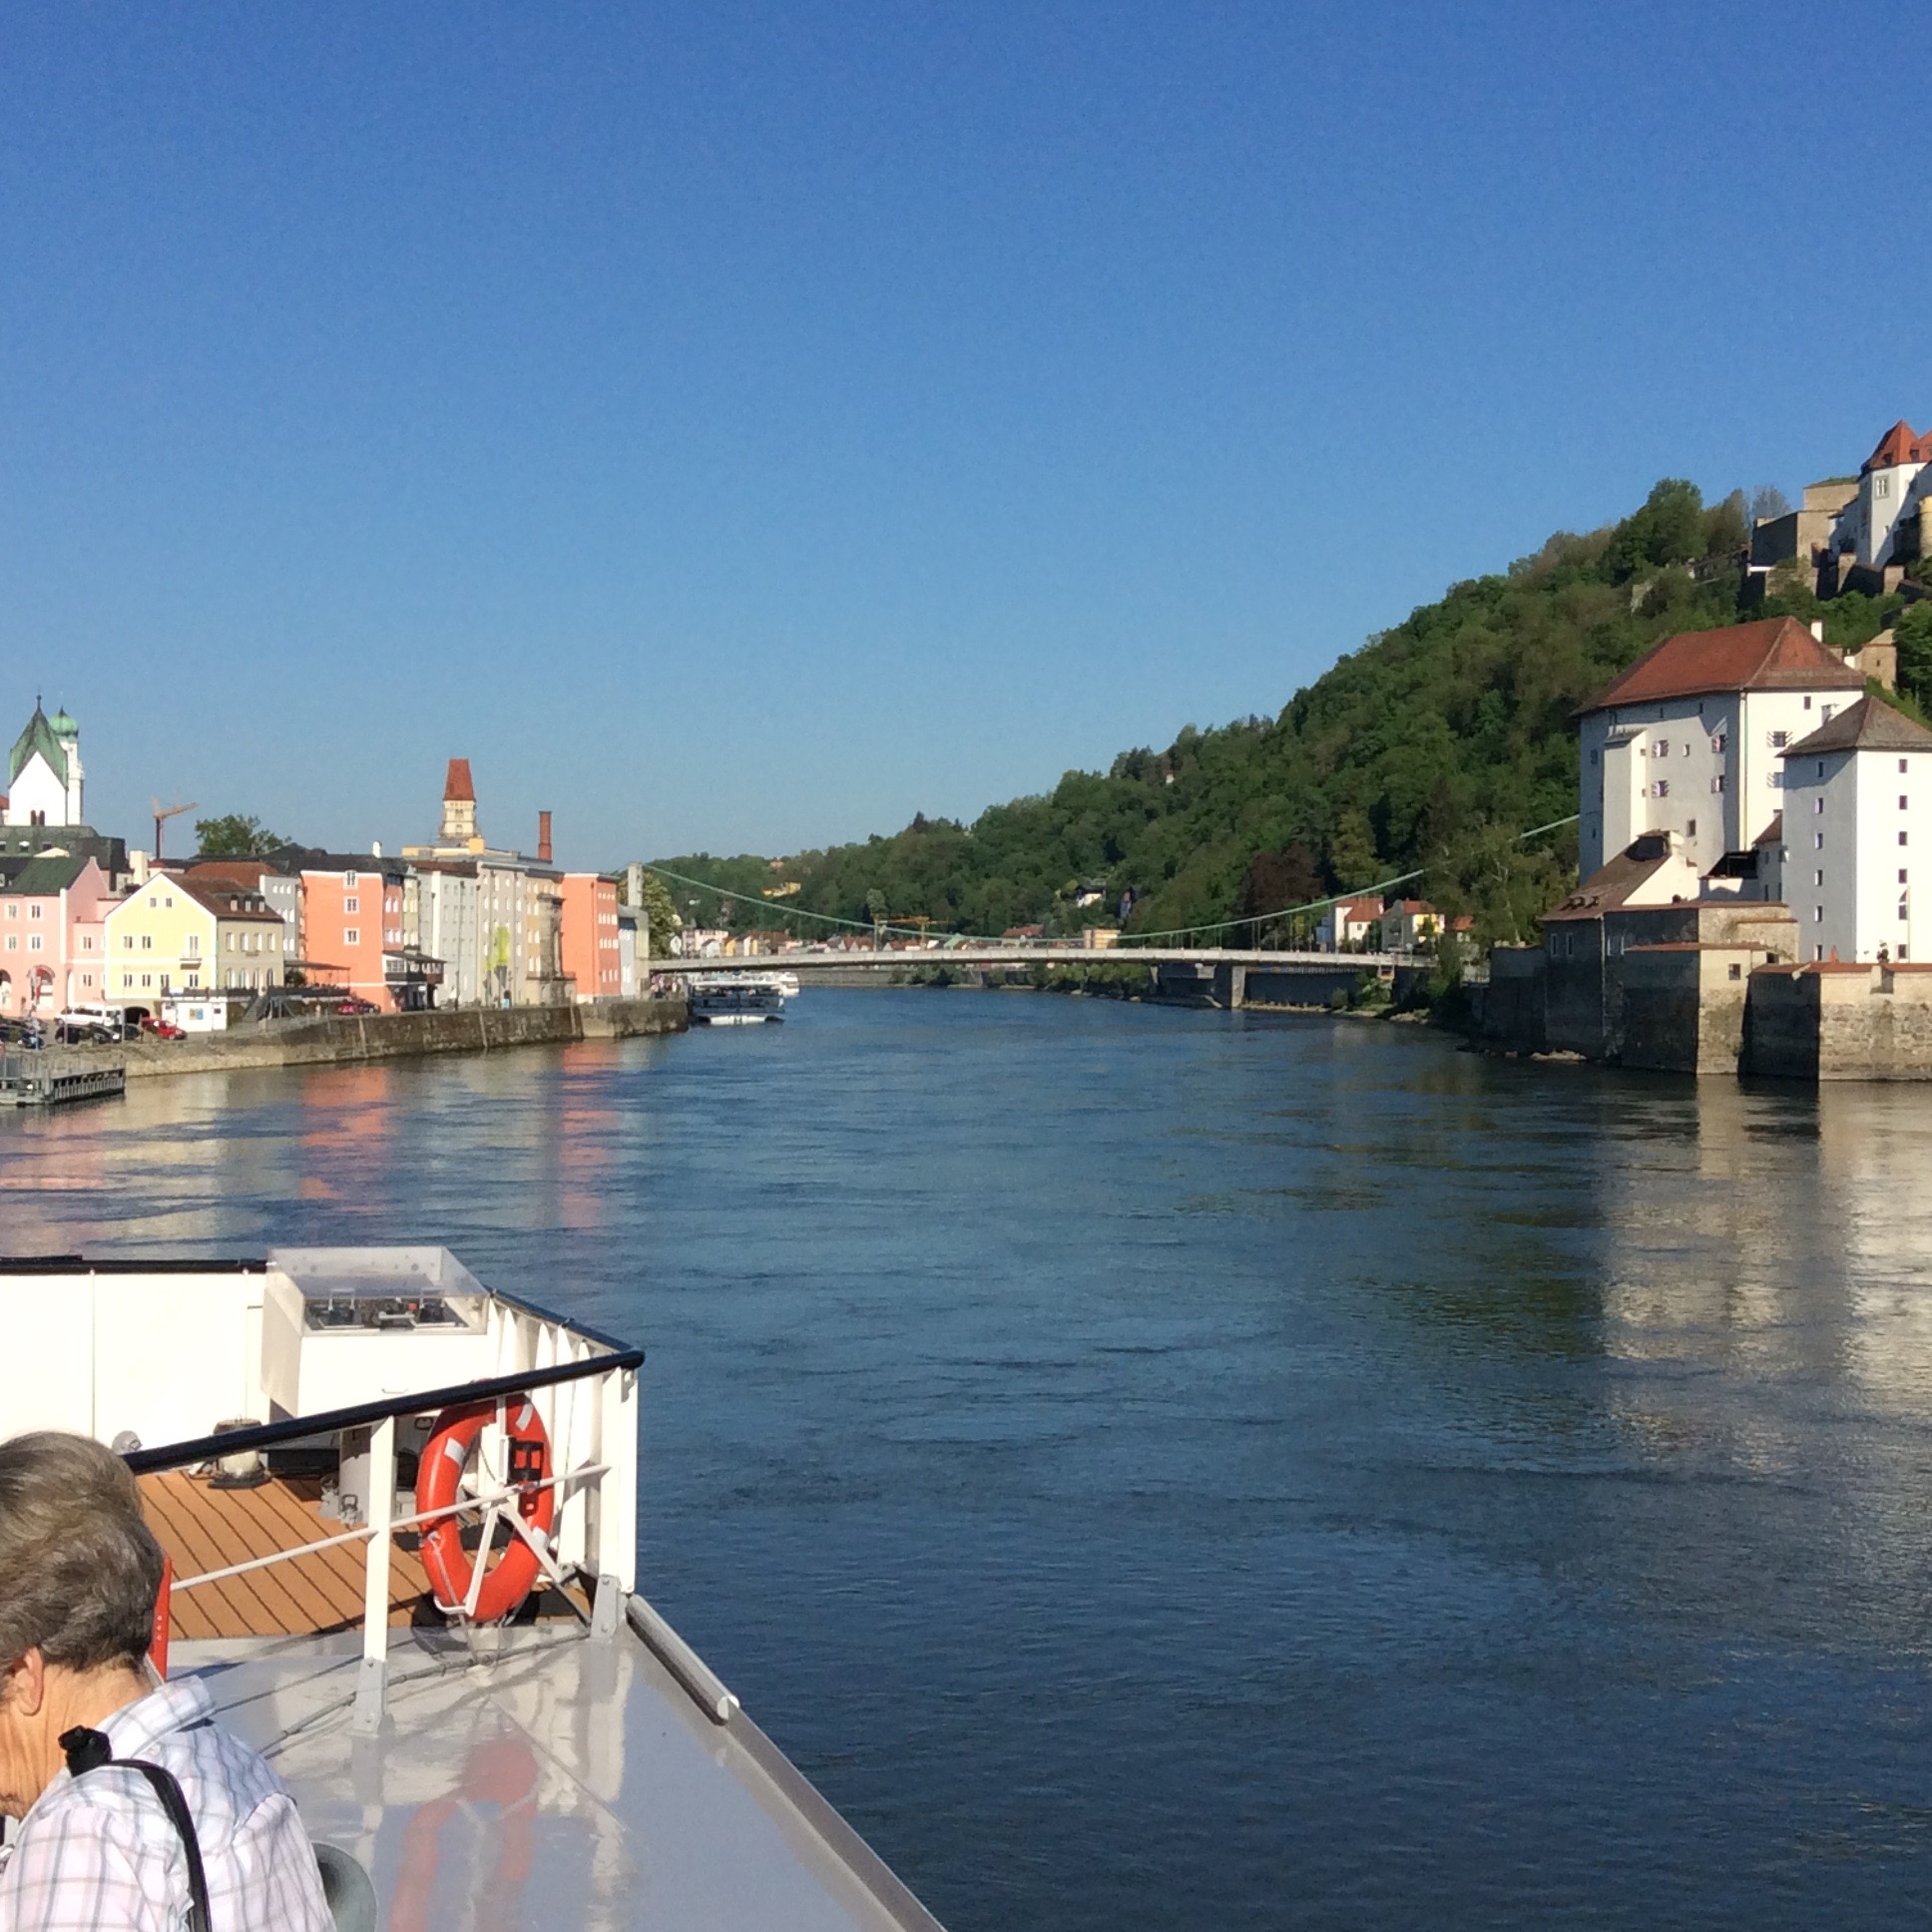 Returning to Passau